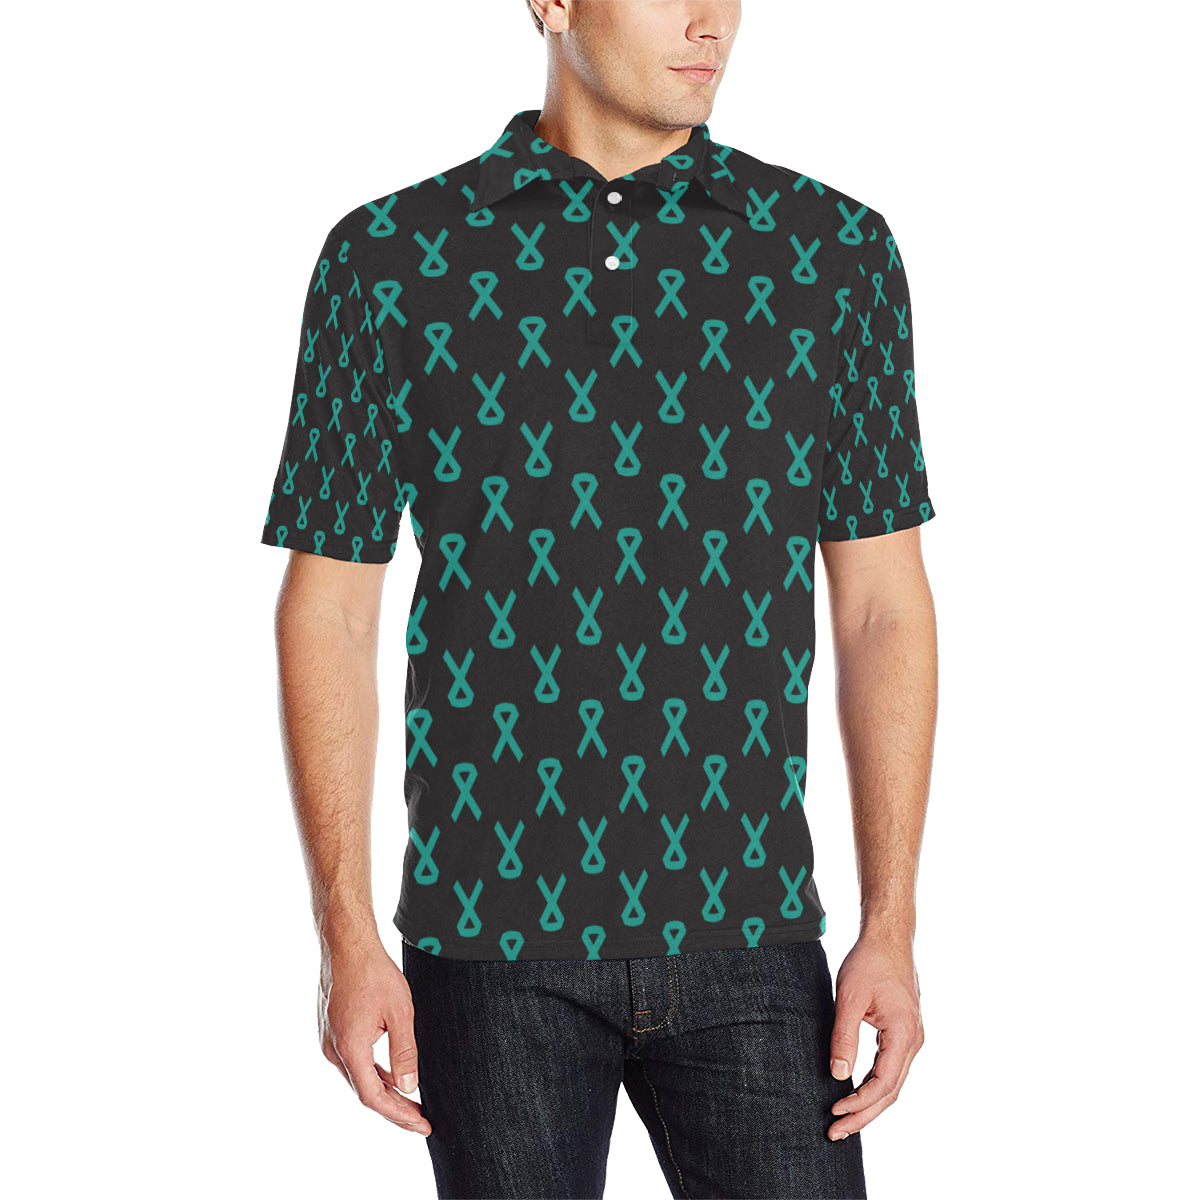 Ovarian cancer Pattern Print Design A01 Men Polo Shirt